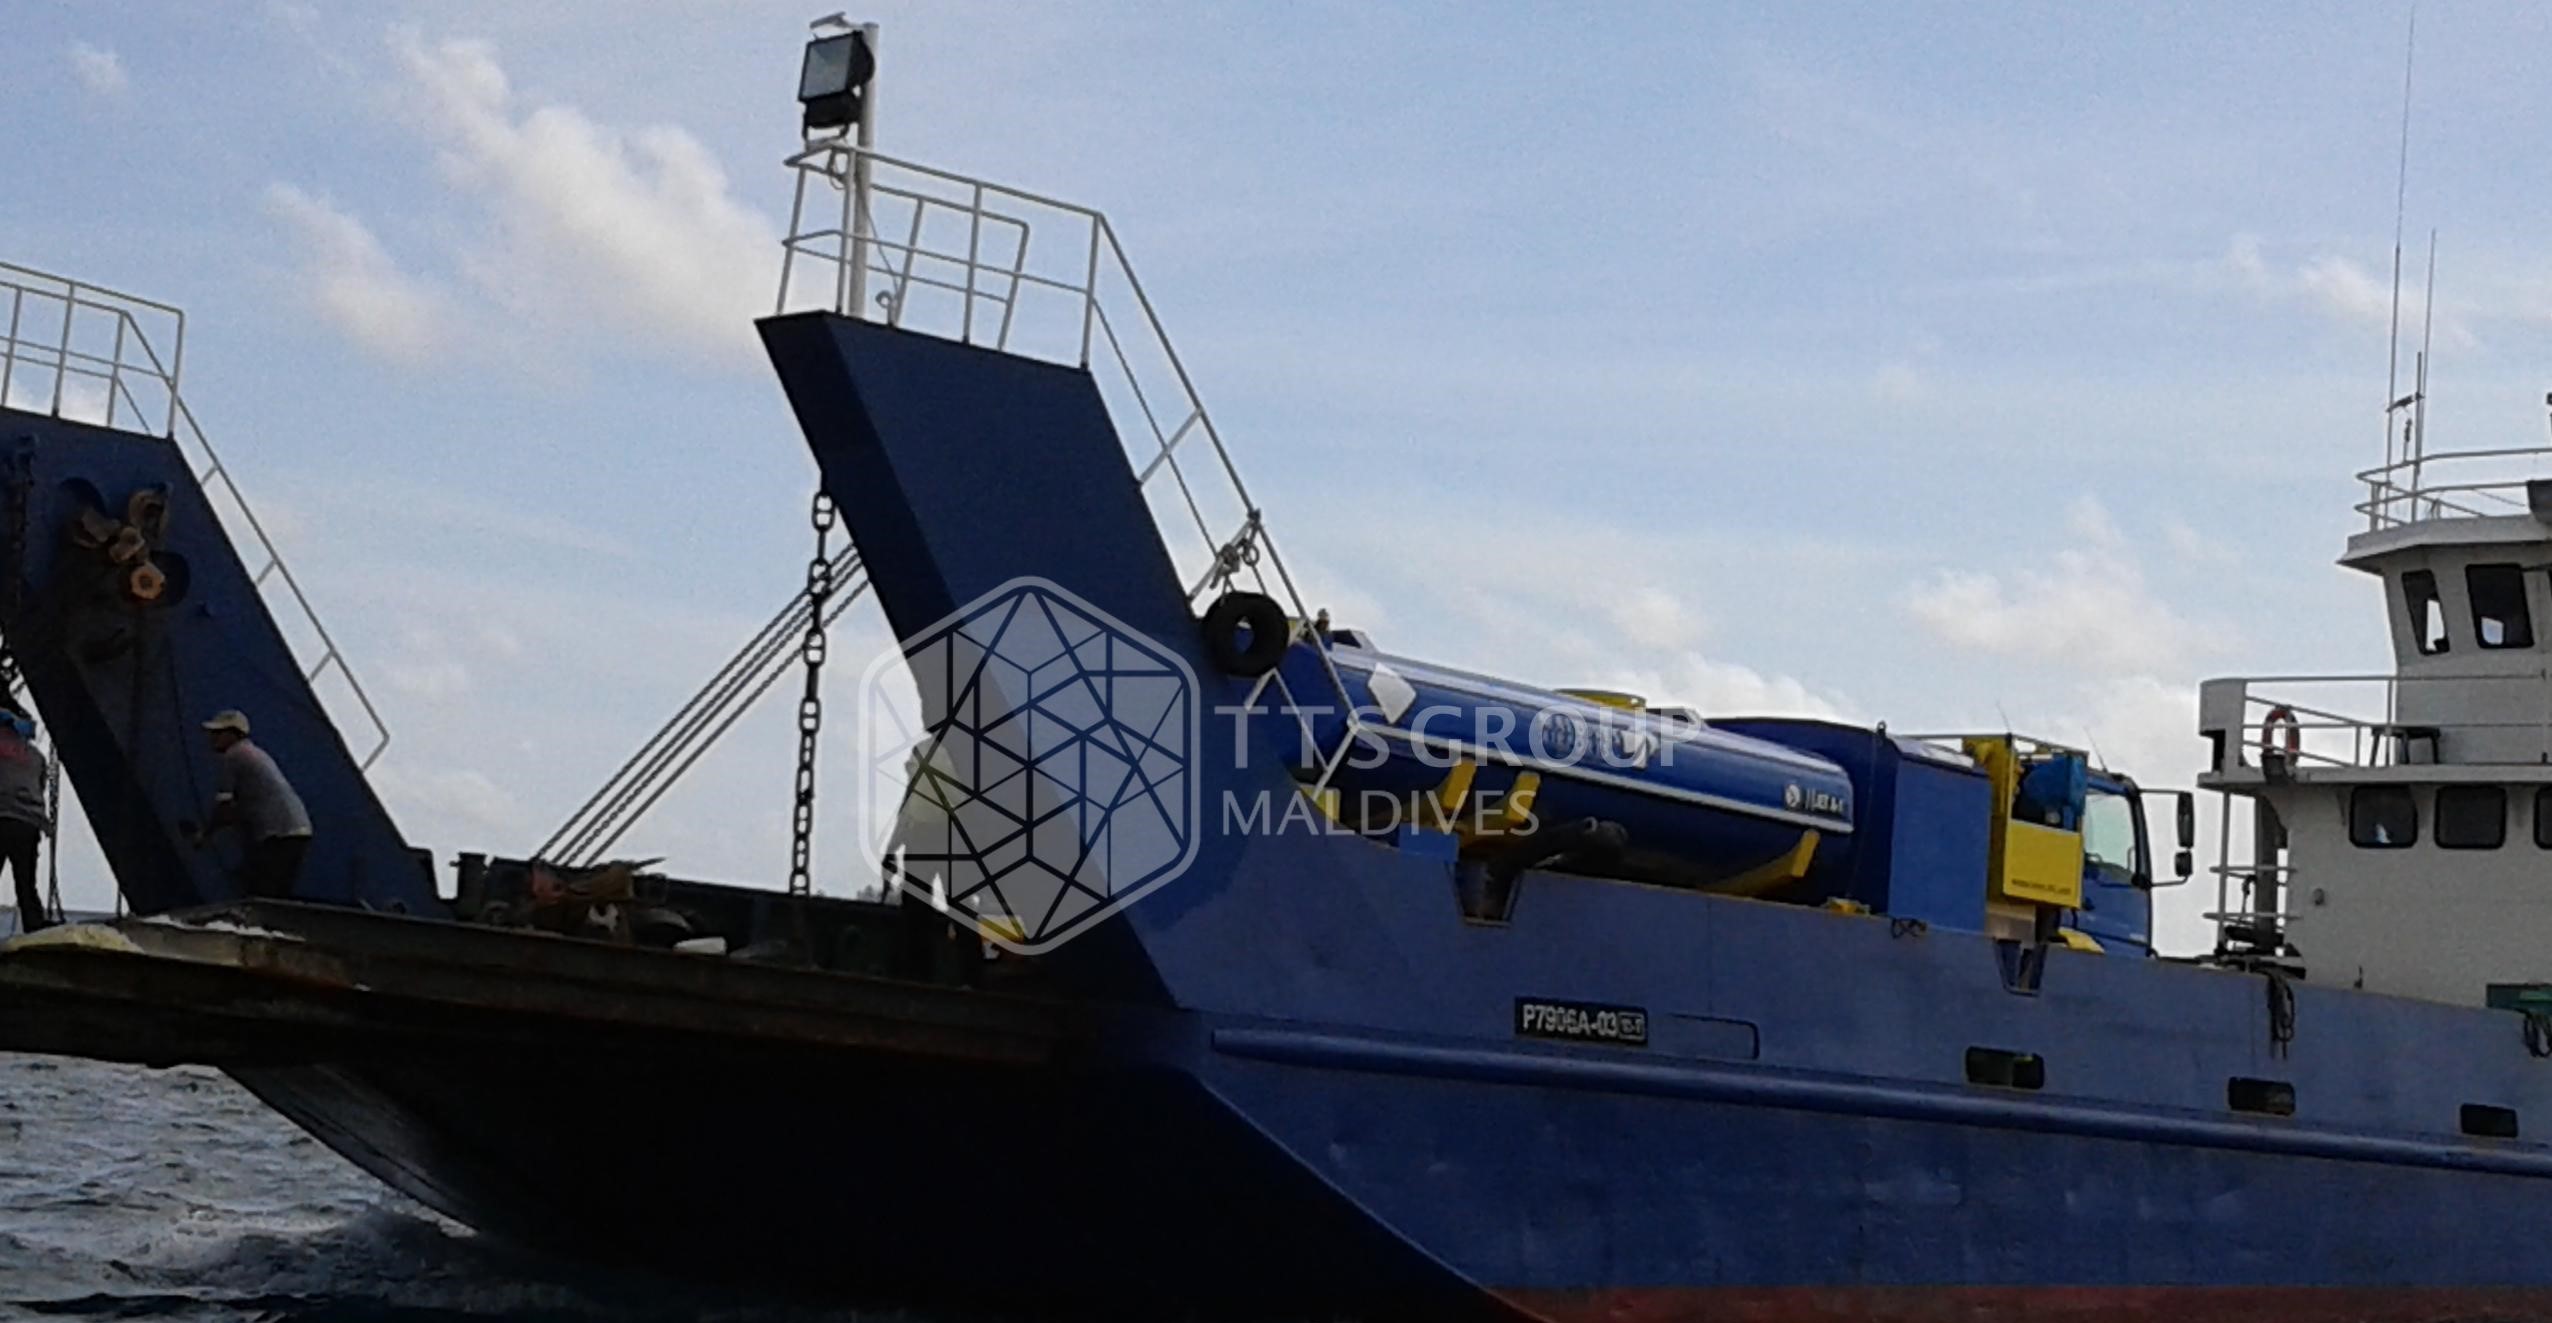 Inter-island transport using our own fleet of marine craft